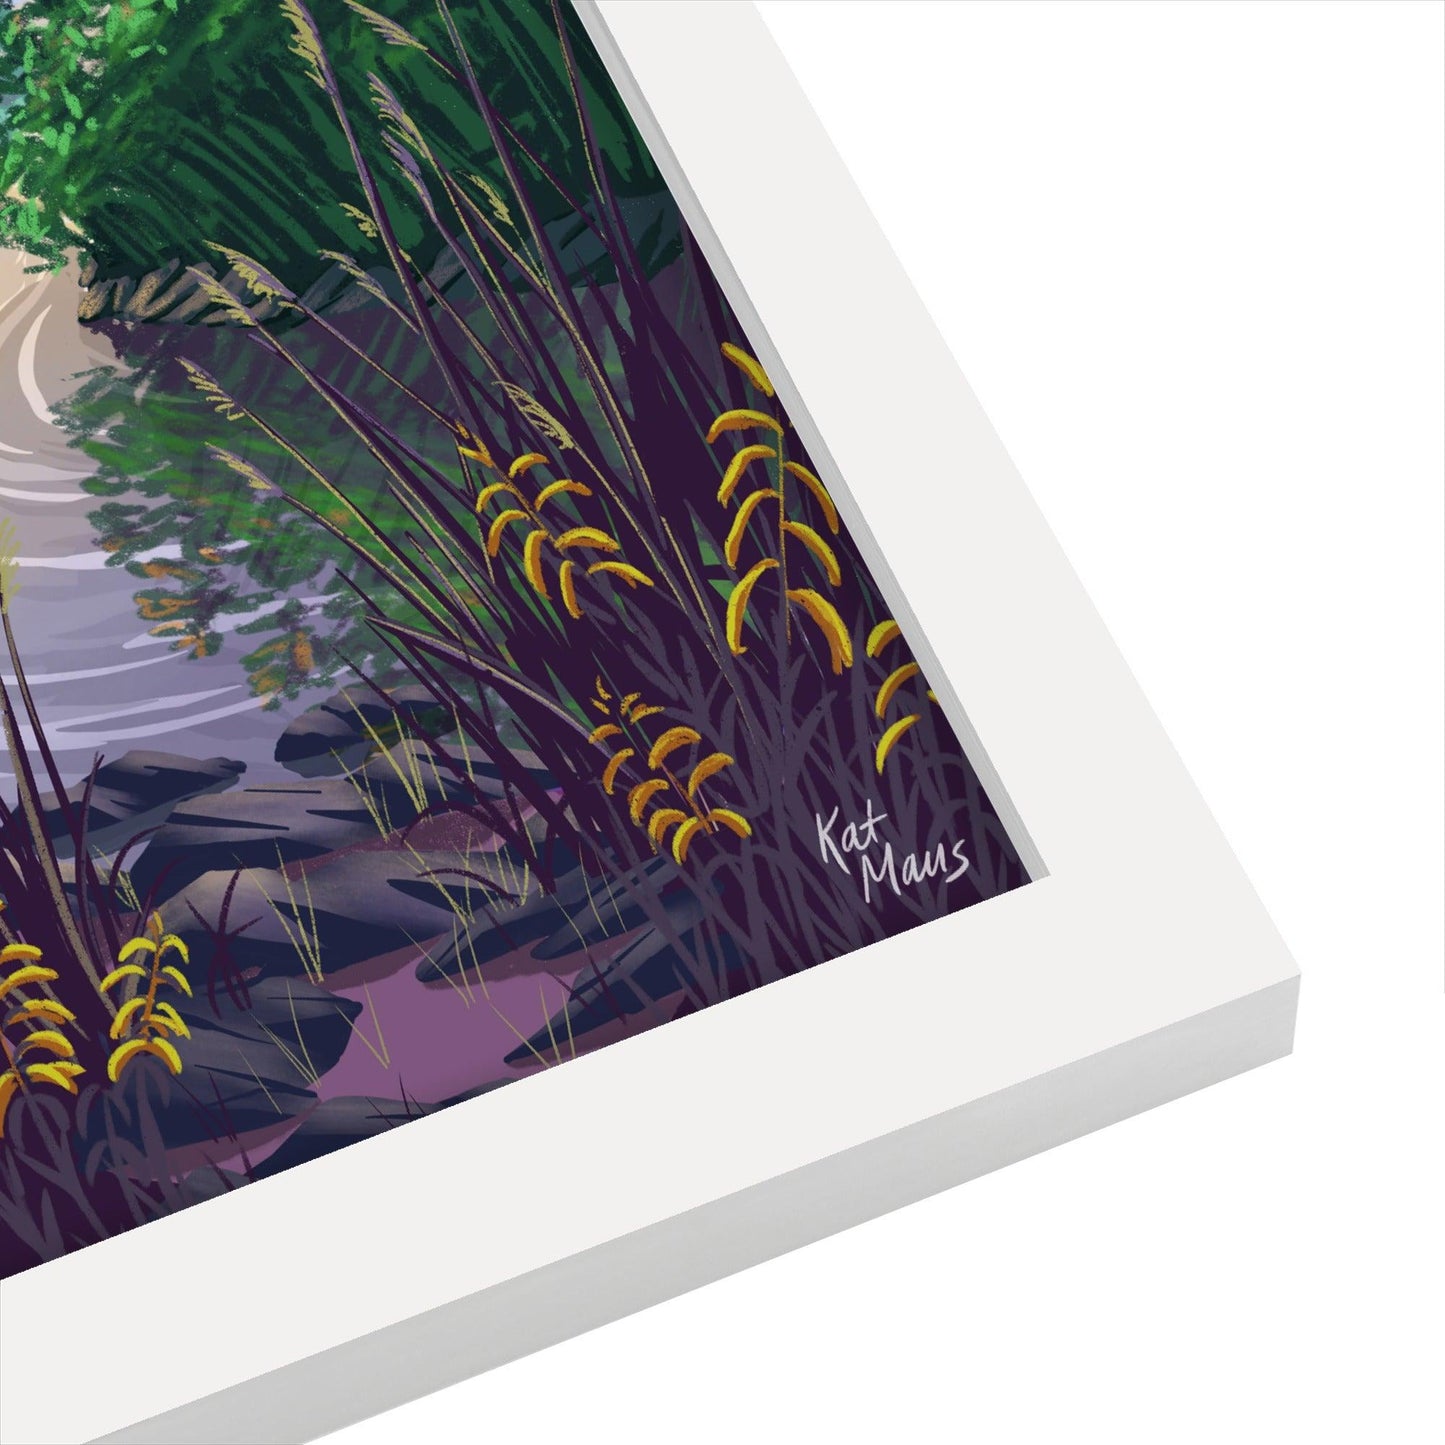 Saco River Nh by Kat Maus  - Framed Print